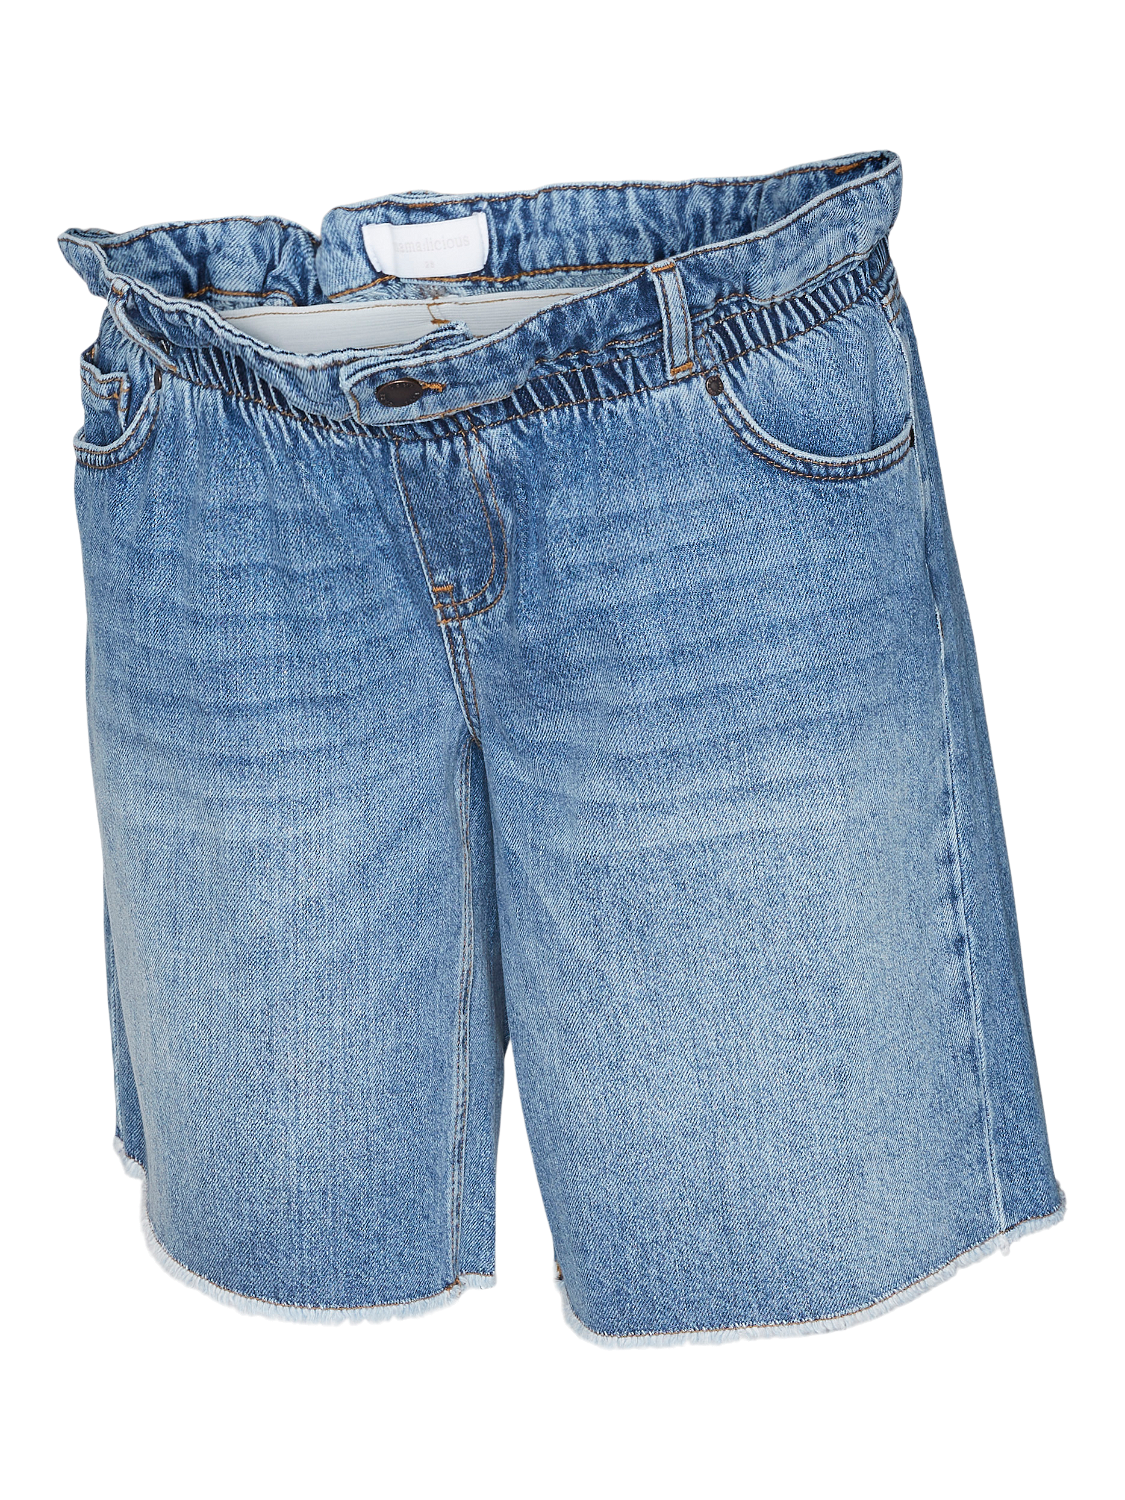 MAMA.LICIOUS Shorts Corte relaxed Tiro bajo Bajos deshilachados -Medium Blue Denim - 20020046